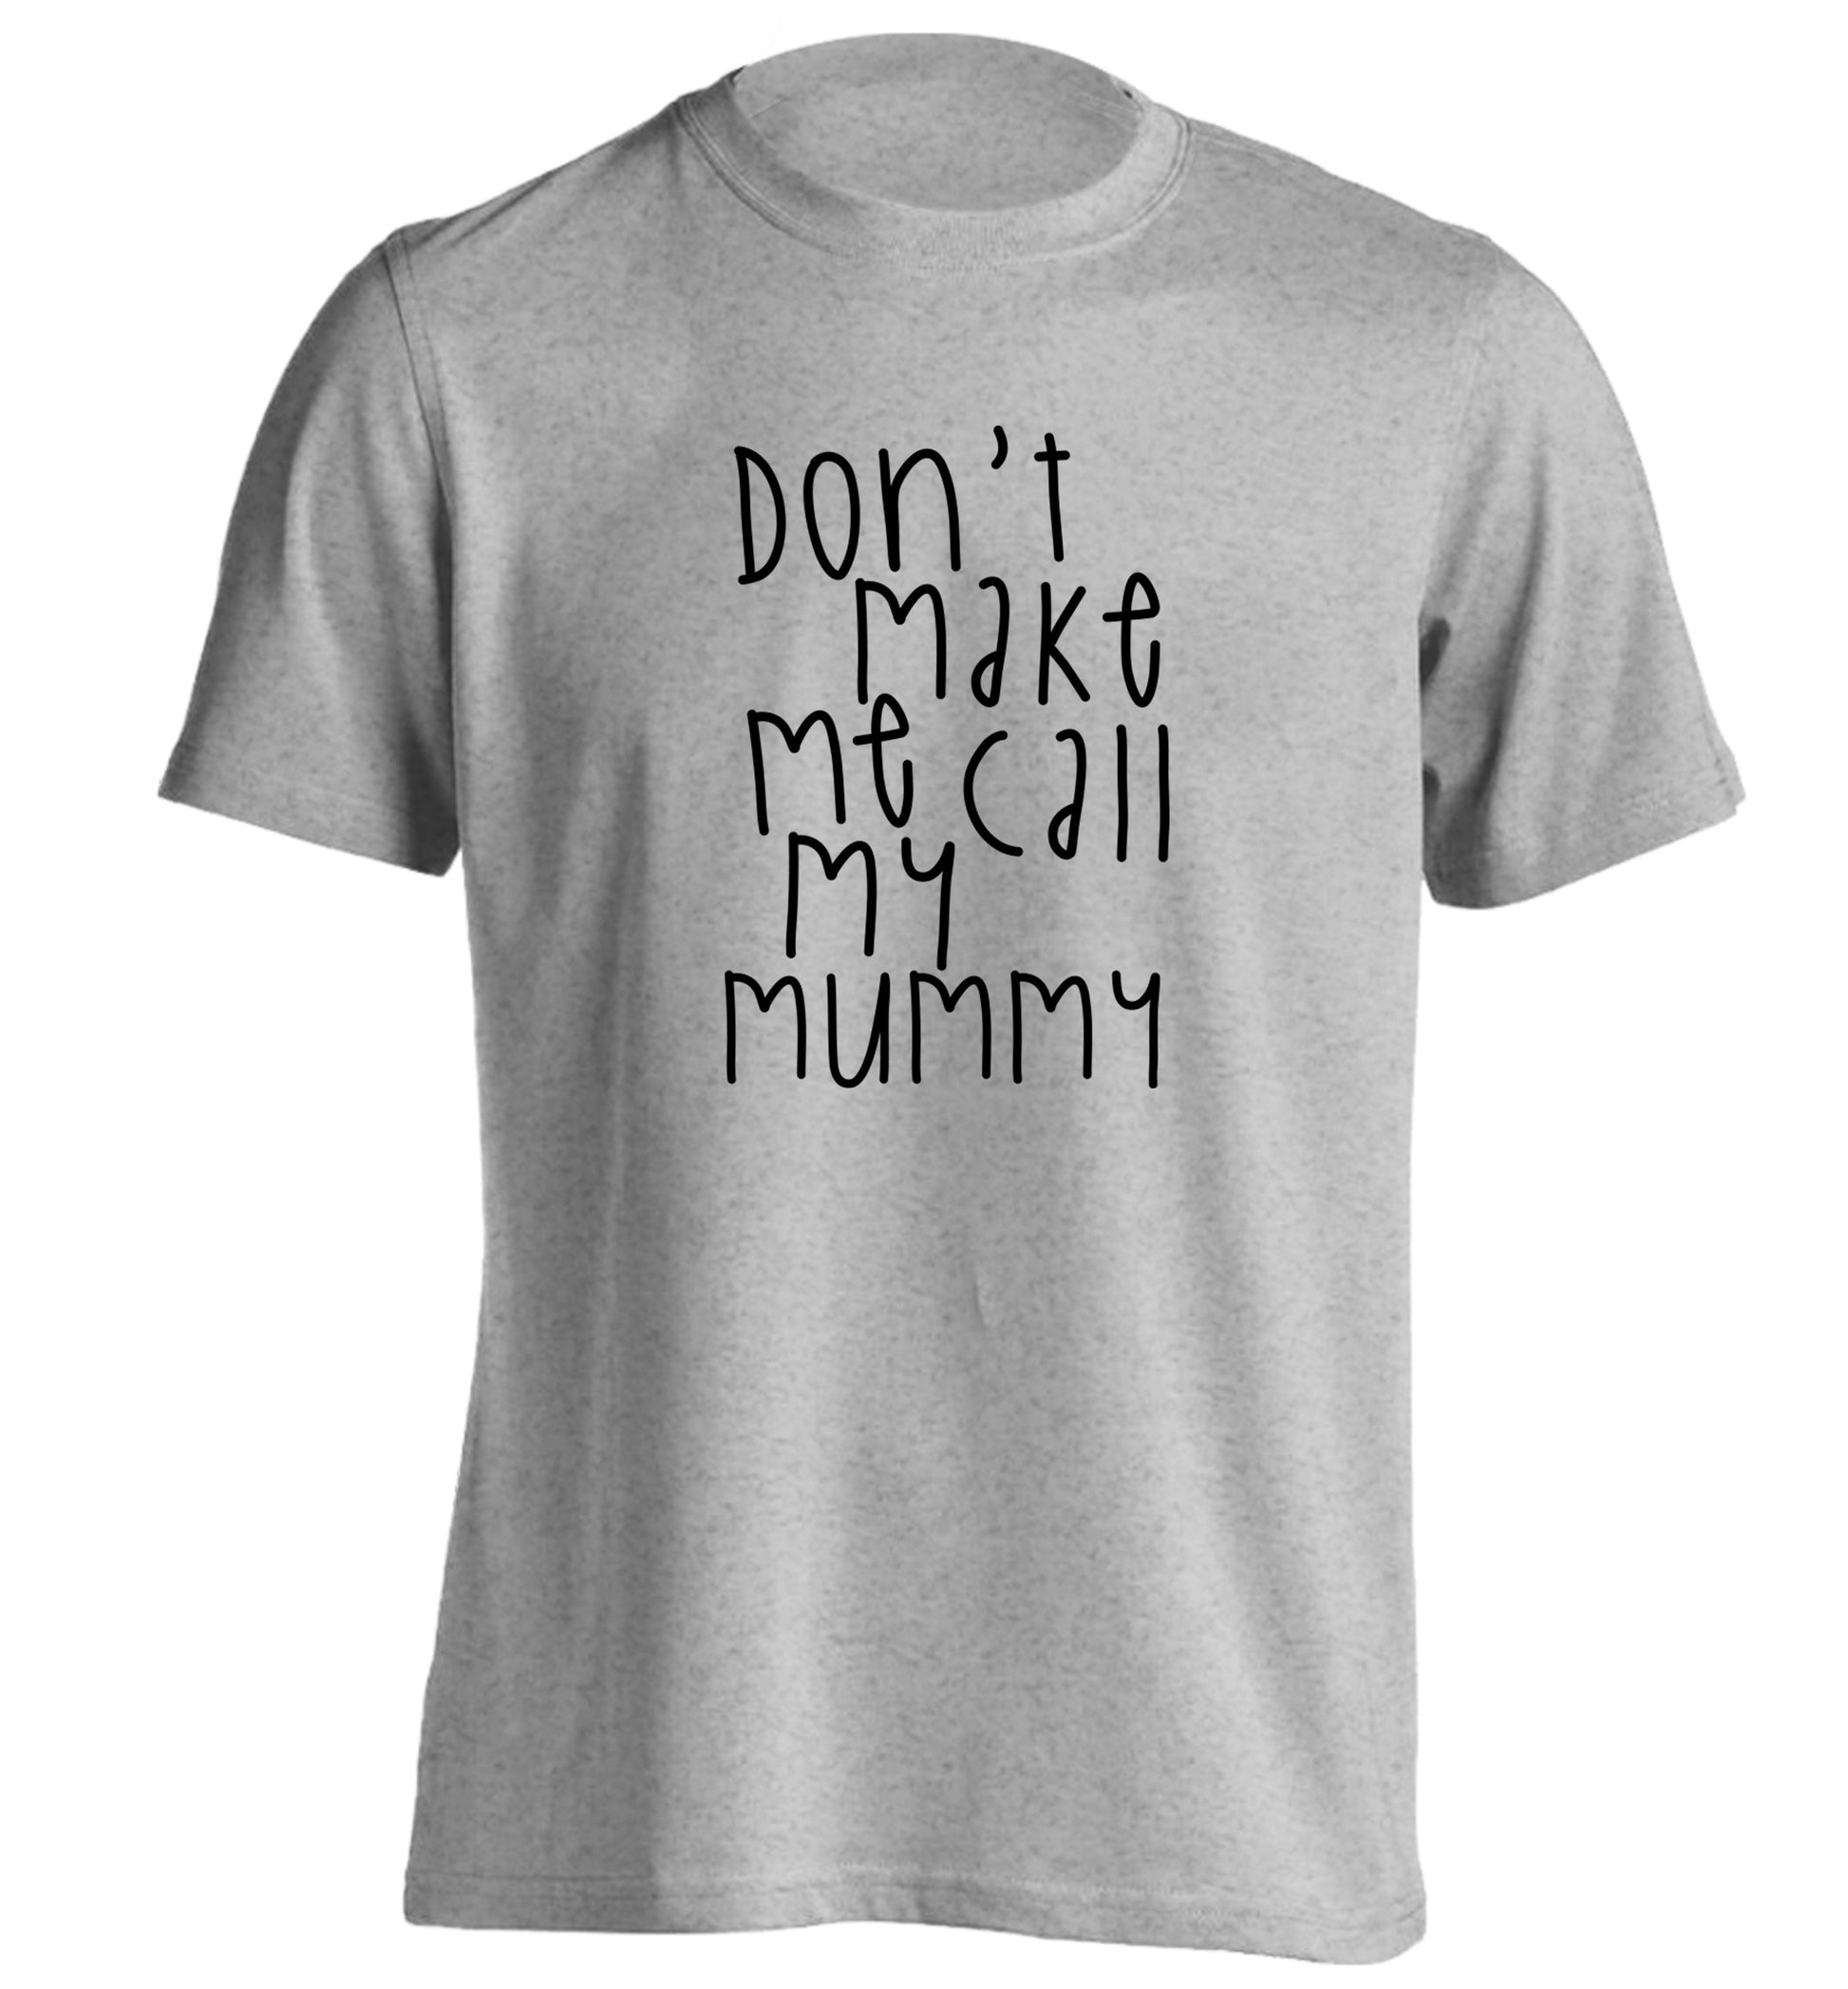 Don't make me call my mummy adults unisex grey Tshirt 2XL